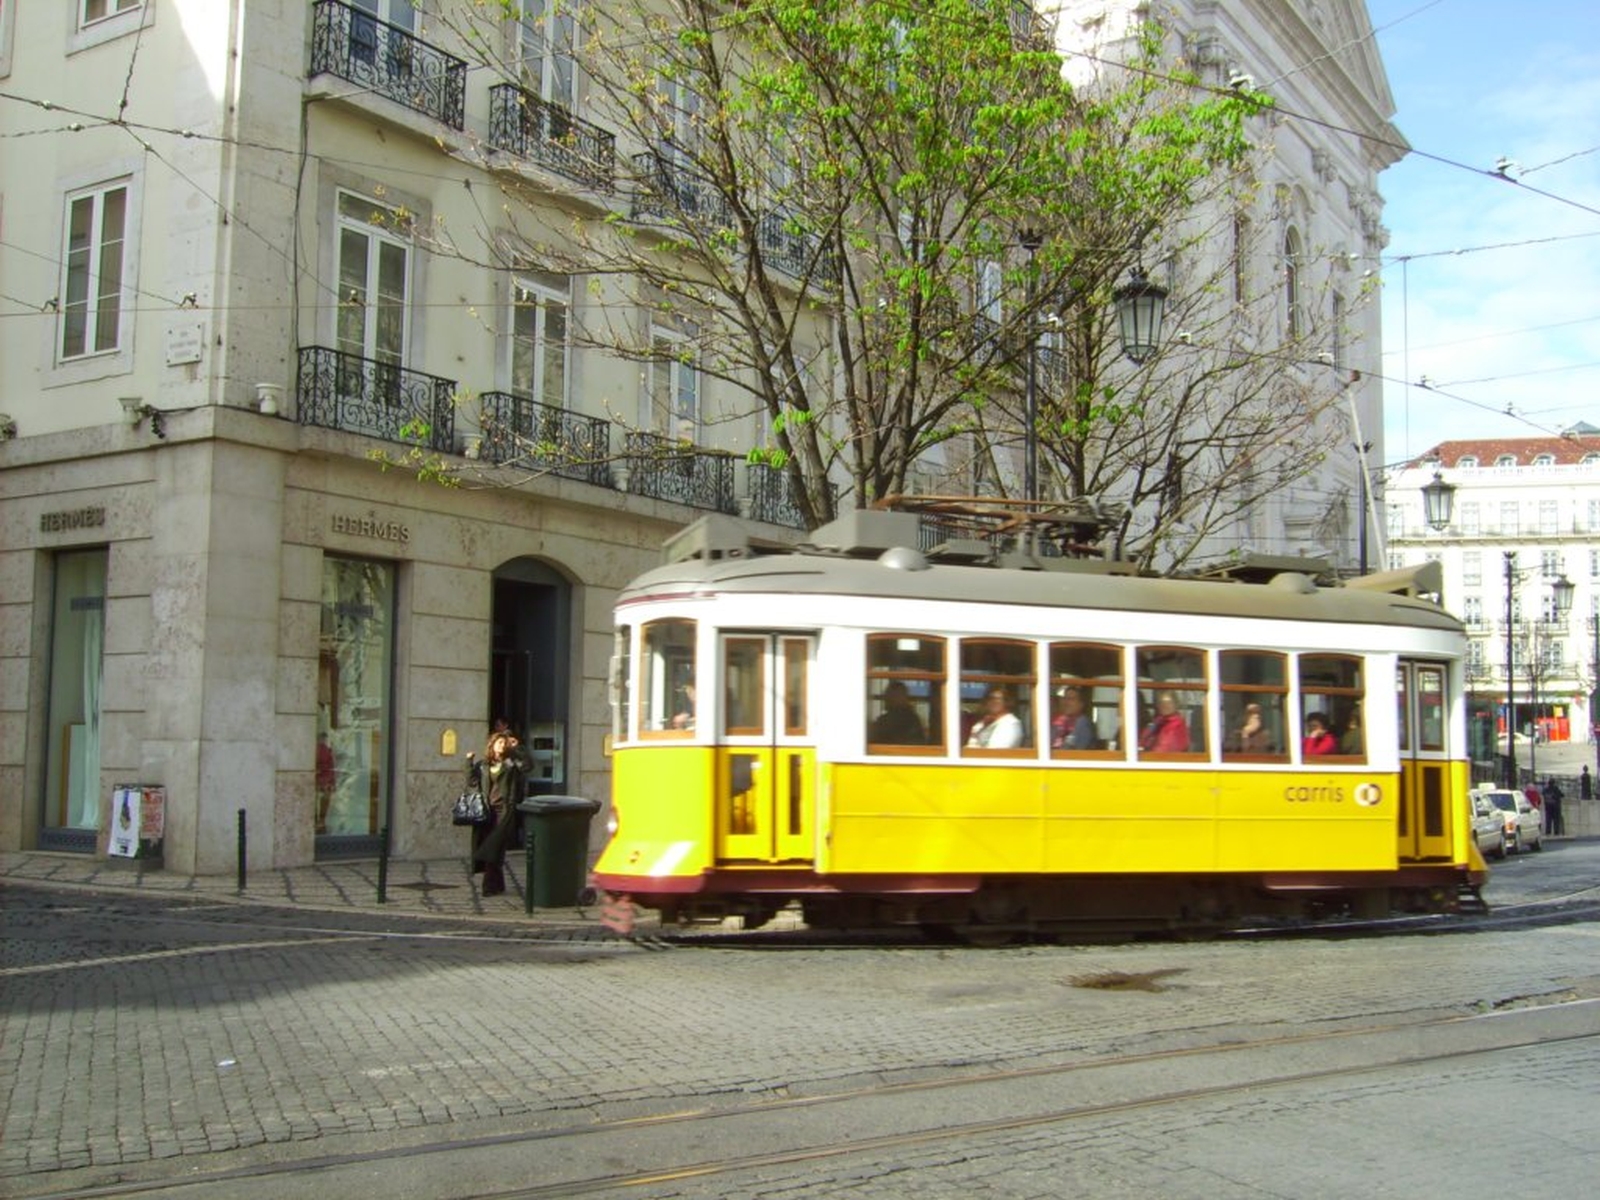 007 - Lisbona